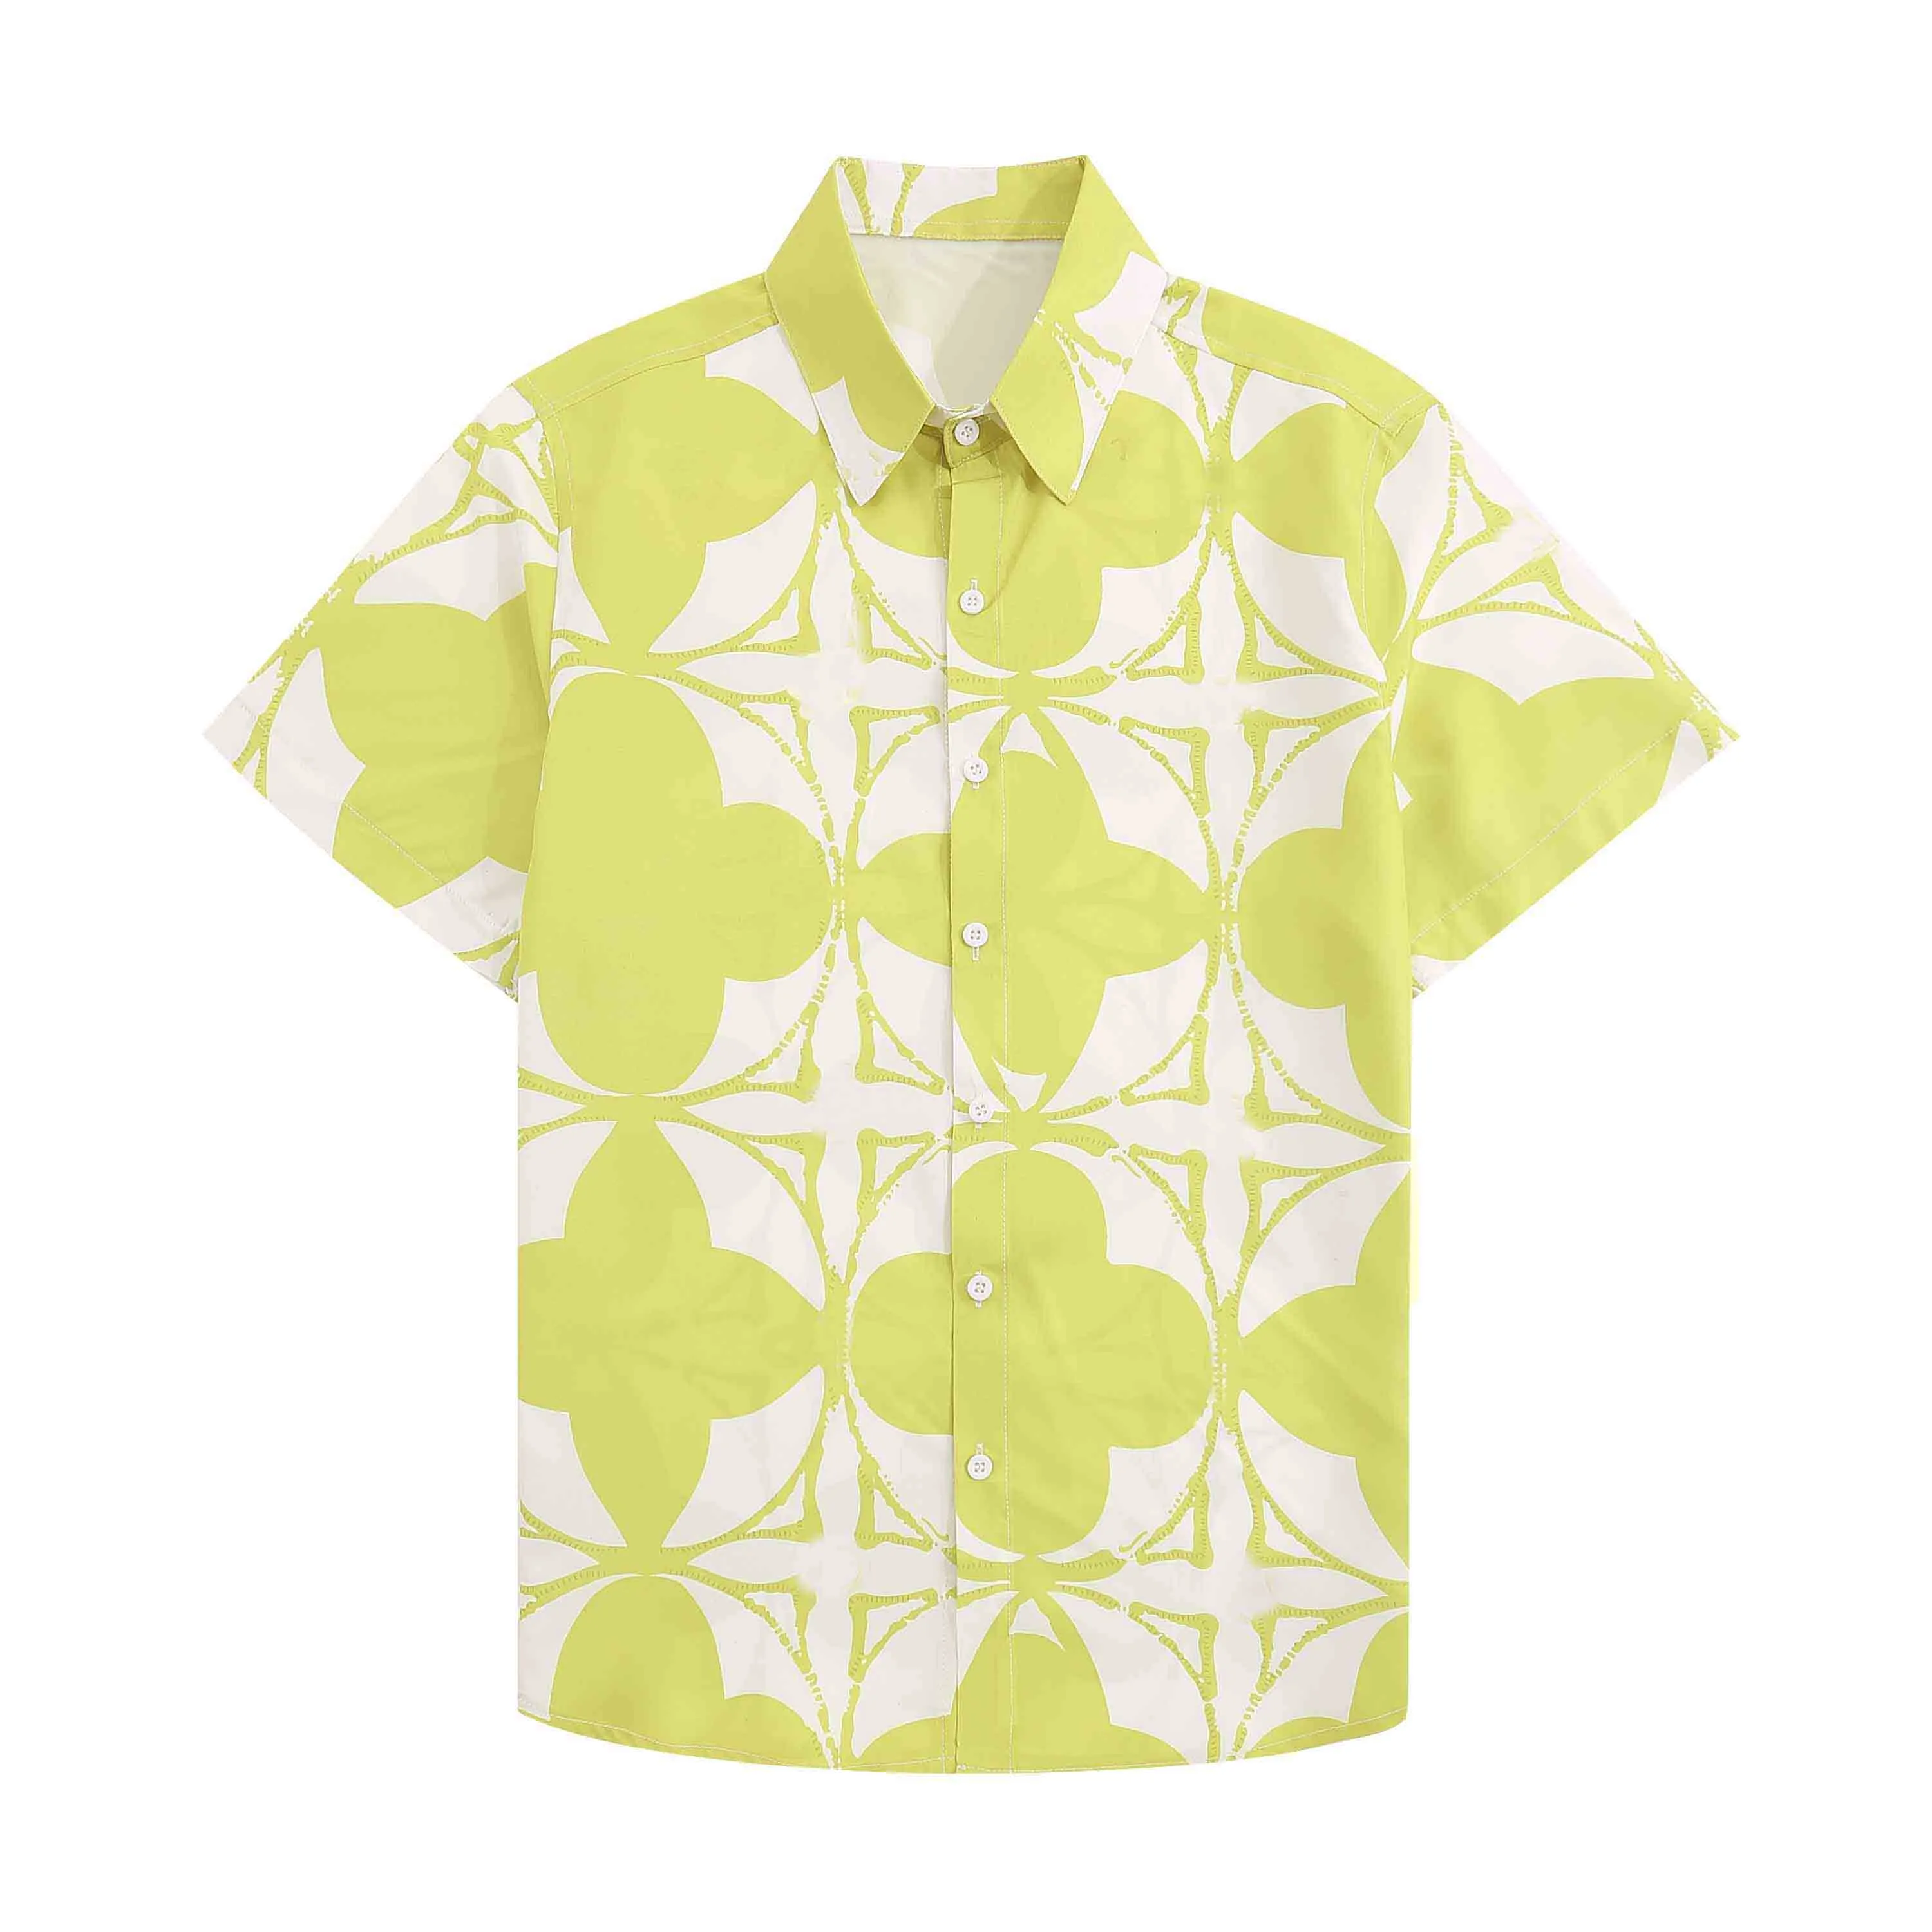 Men's Casual Shirts Male Top Sea Boat Coconut Tree Print Soft Menswear Beach Vacation Shirt Dating Wear